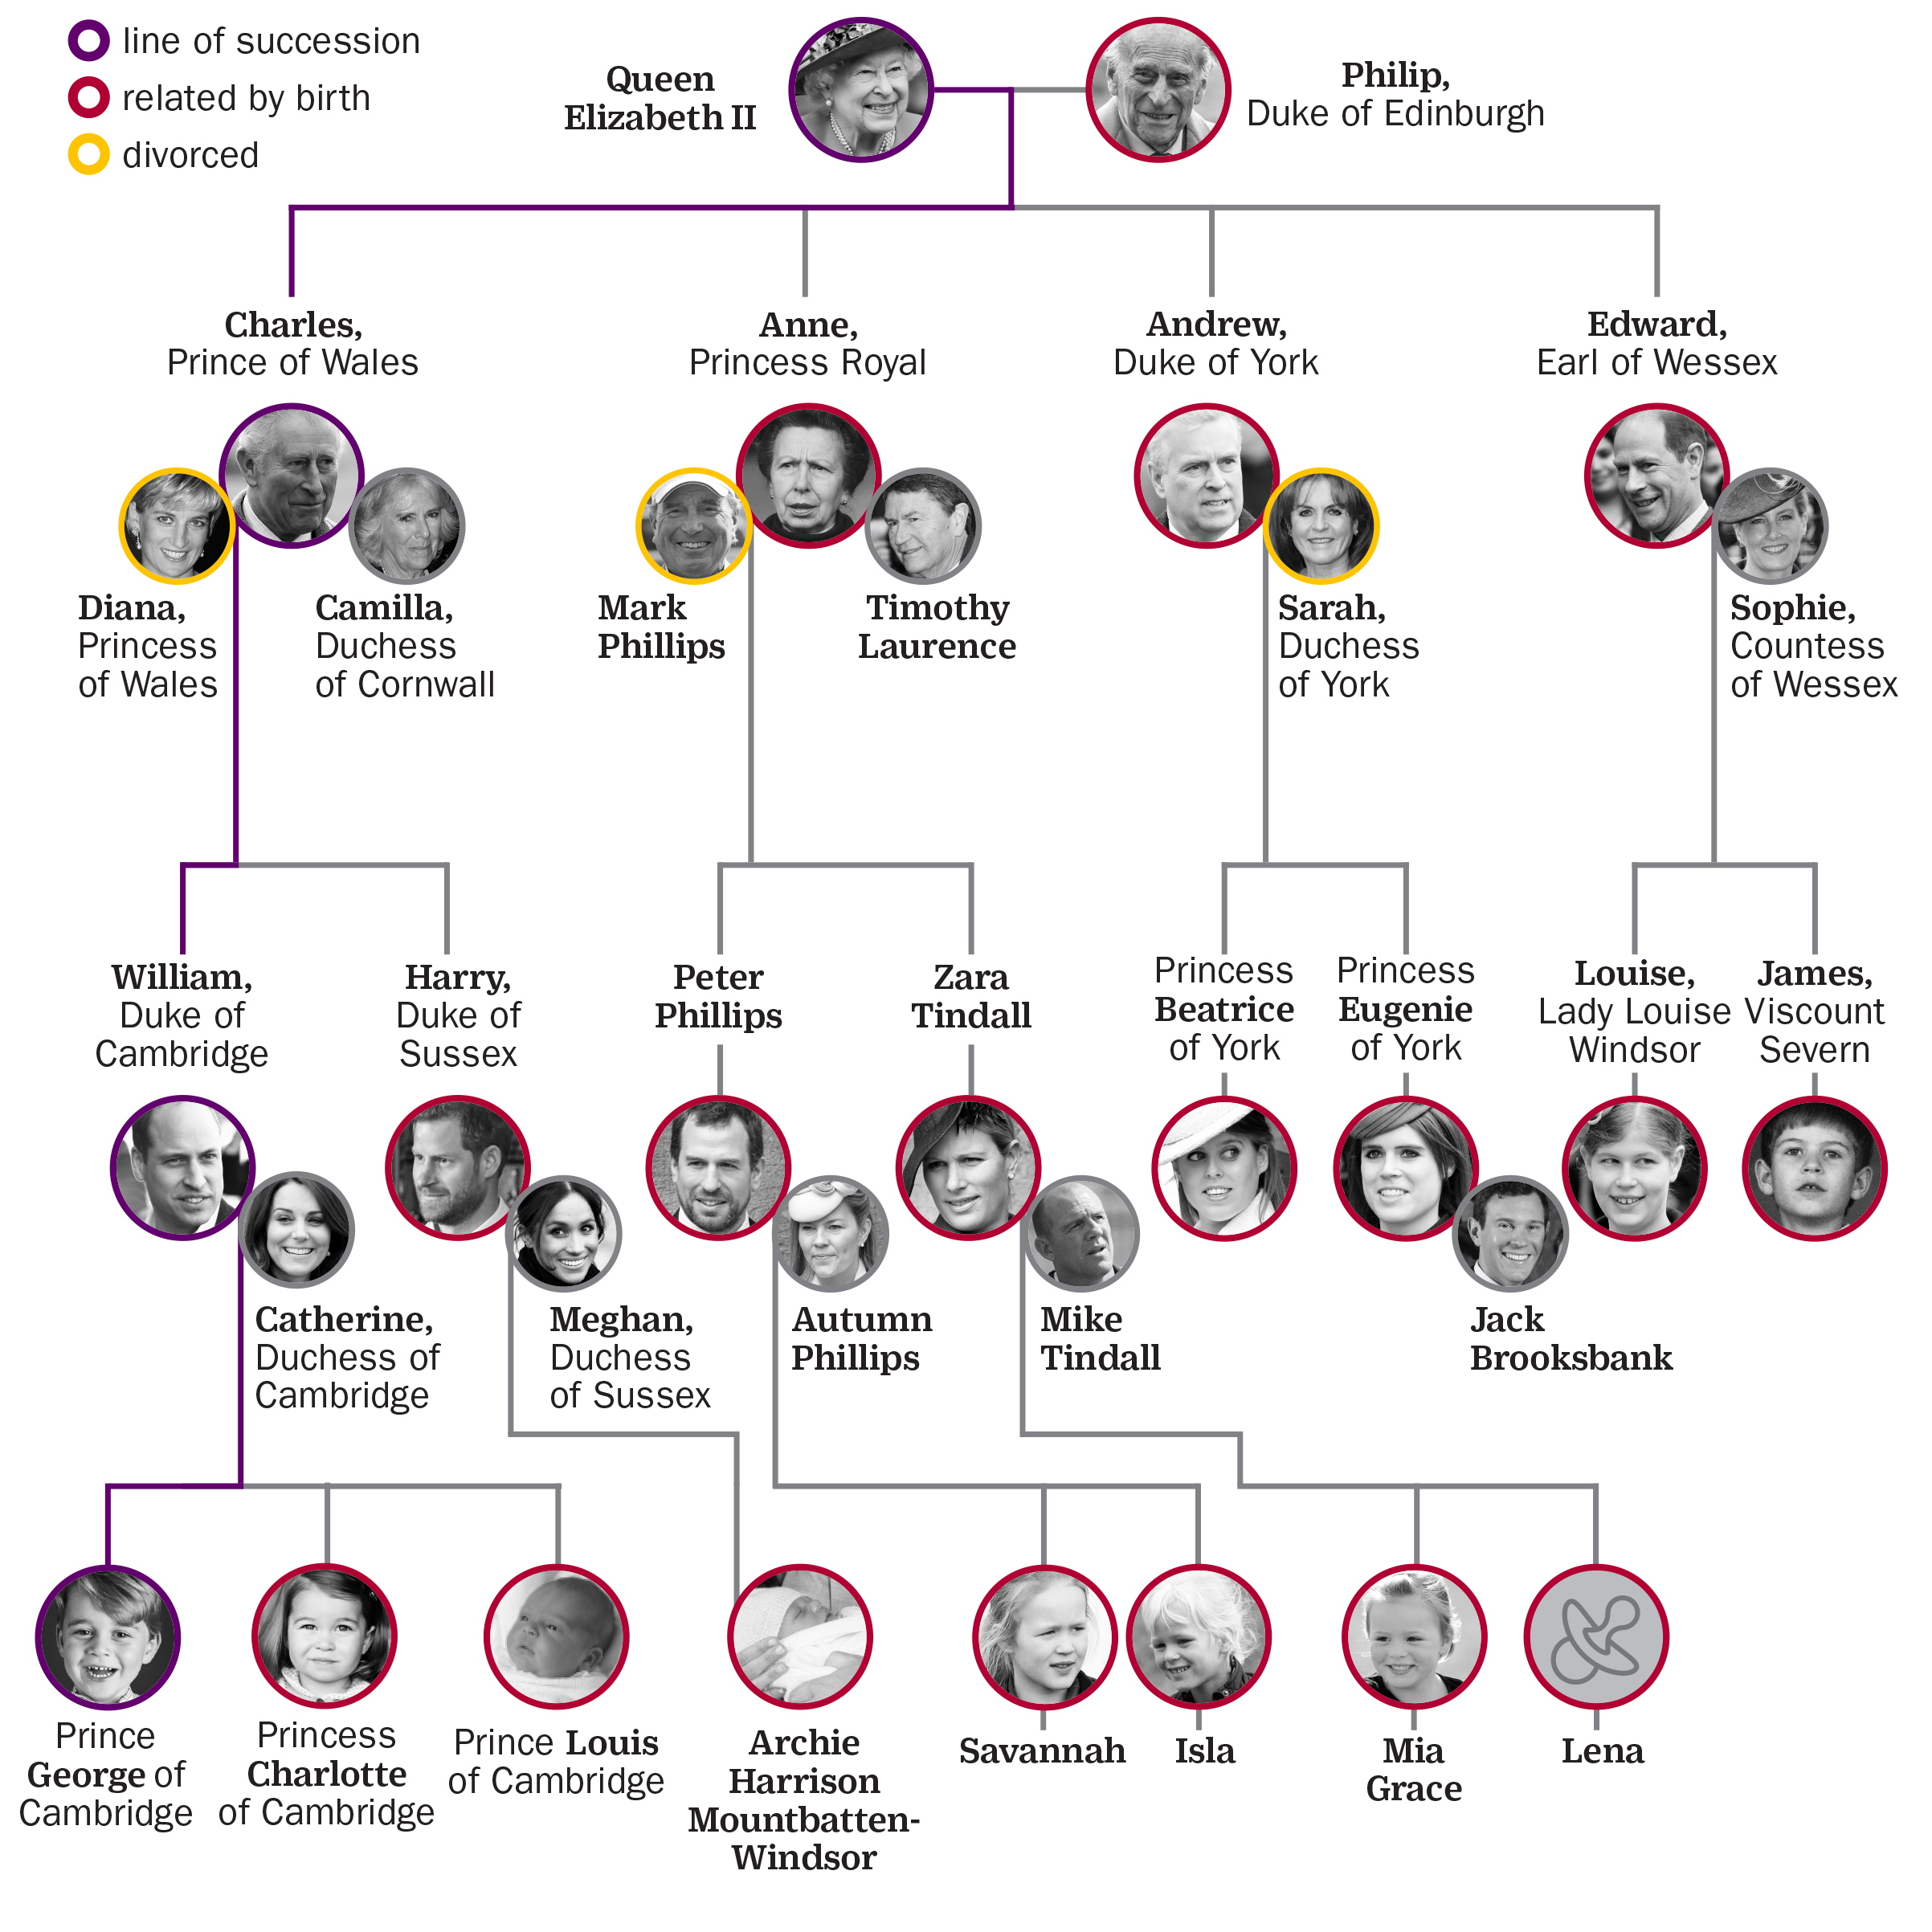 British Royal Family Hierarchy